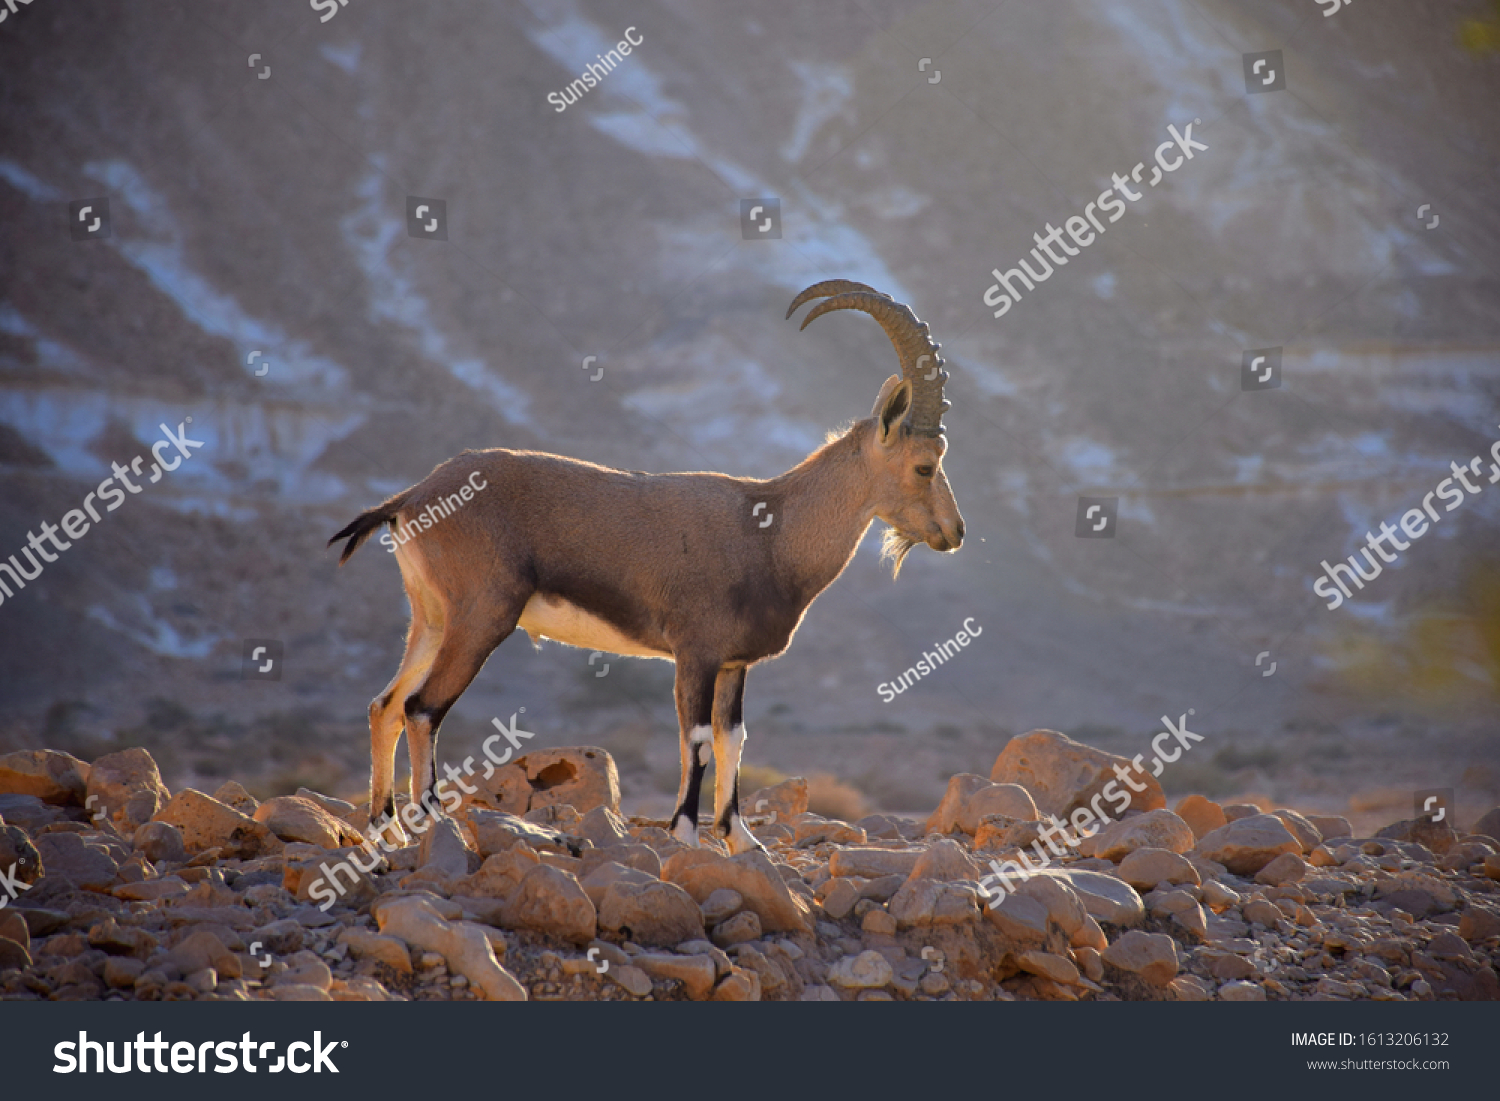 Nubian ibex a desert dwelling goat (capra ibex, capra nubiana) biblical animal in Judean (Judea) desert and the Negev, southern Israel. black and white image, animal in nature reserve (wildlife) #1613206132